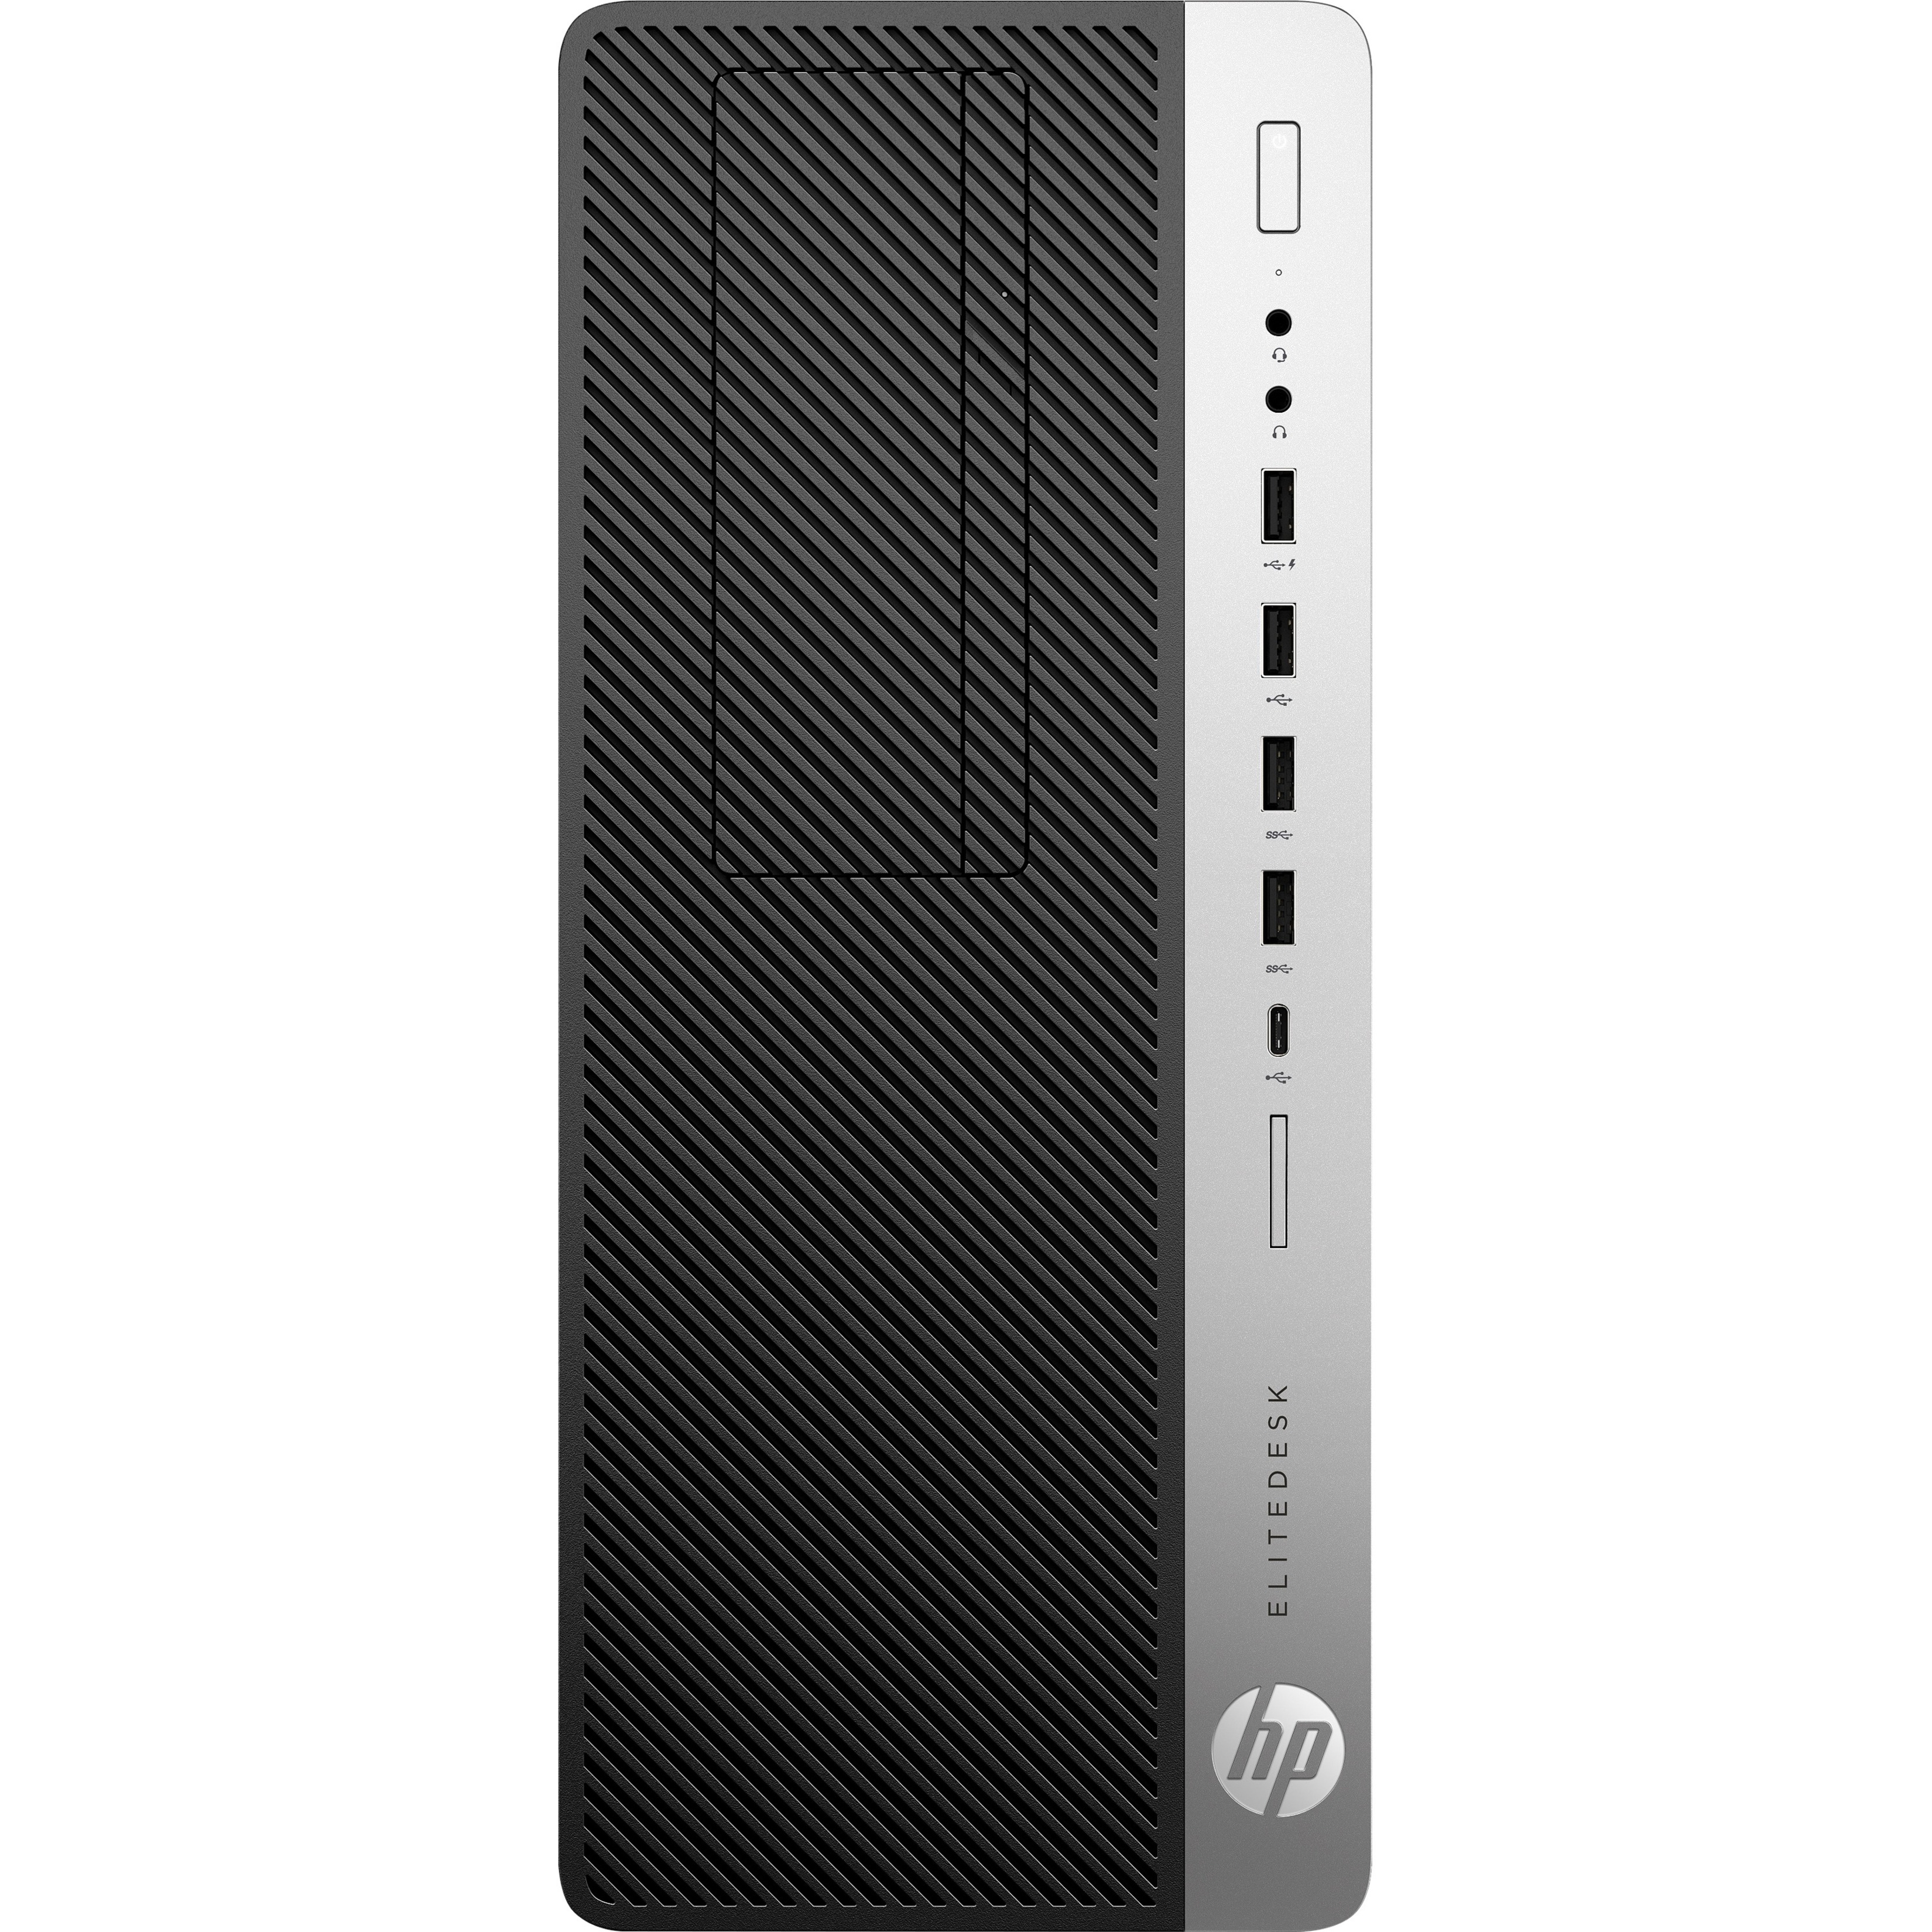 HP EliteDesk 800 G4 Desktop Computer - Intel Core i5-8500 - 16GB RAM - 512GB SSD - Tower - image 4 of 5